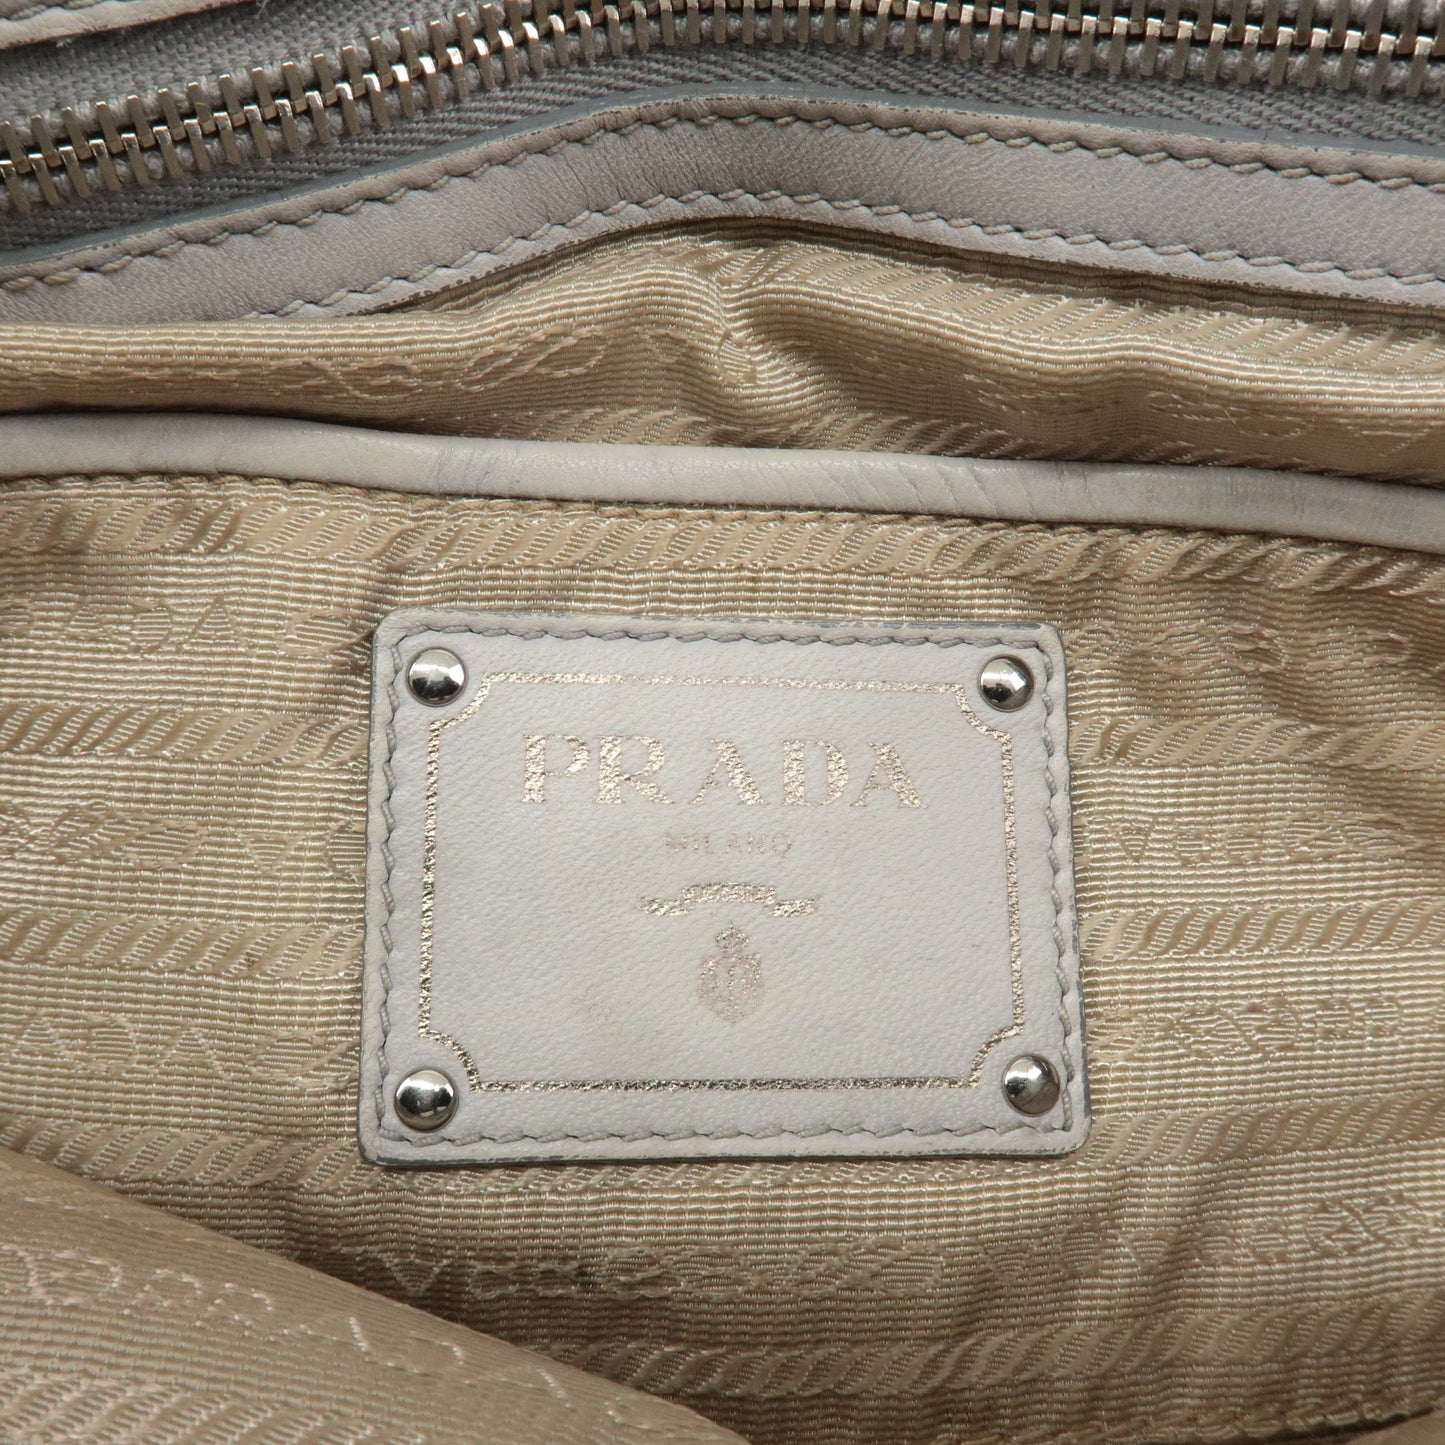 PRADA Leather 2Way Bag Hand Bag Shoulder Bag Light Gray